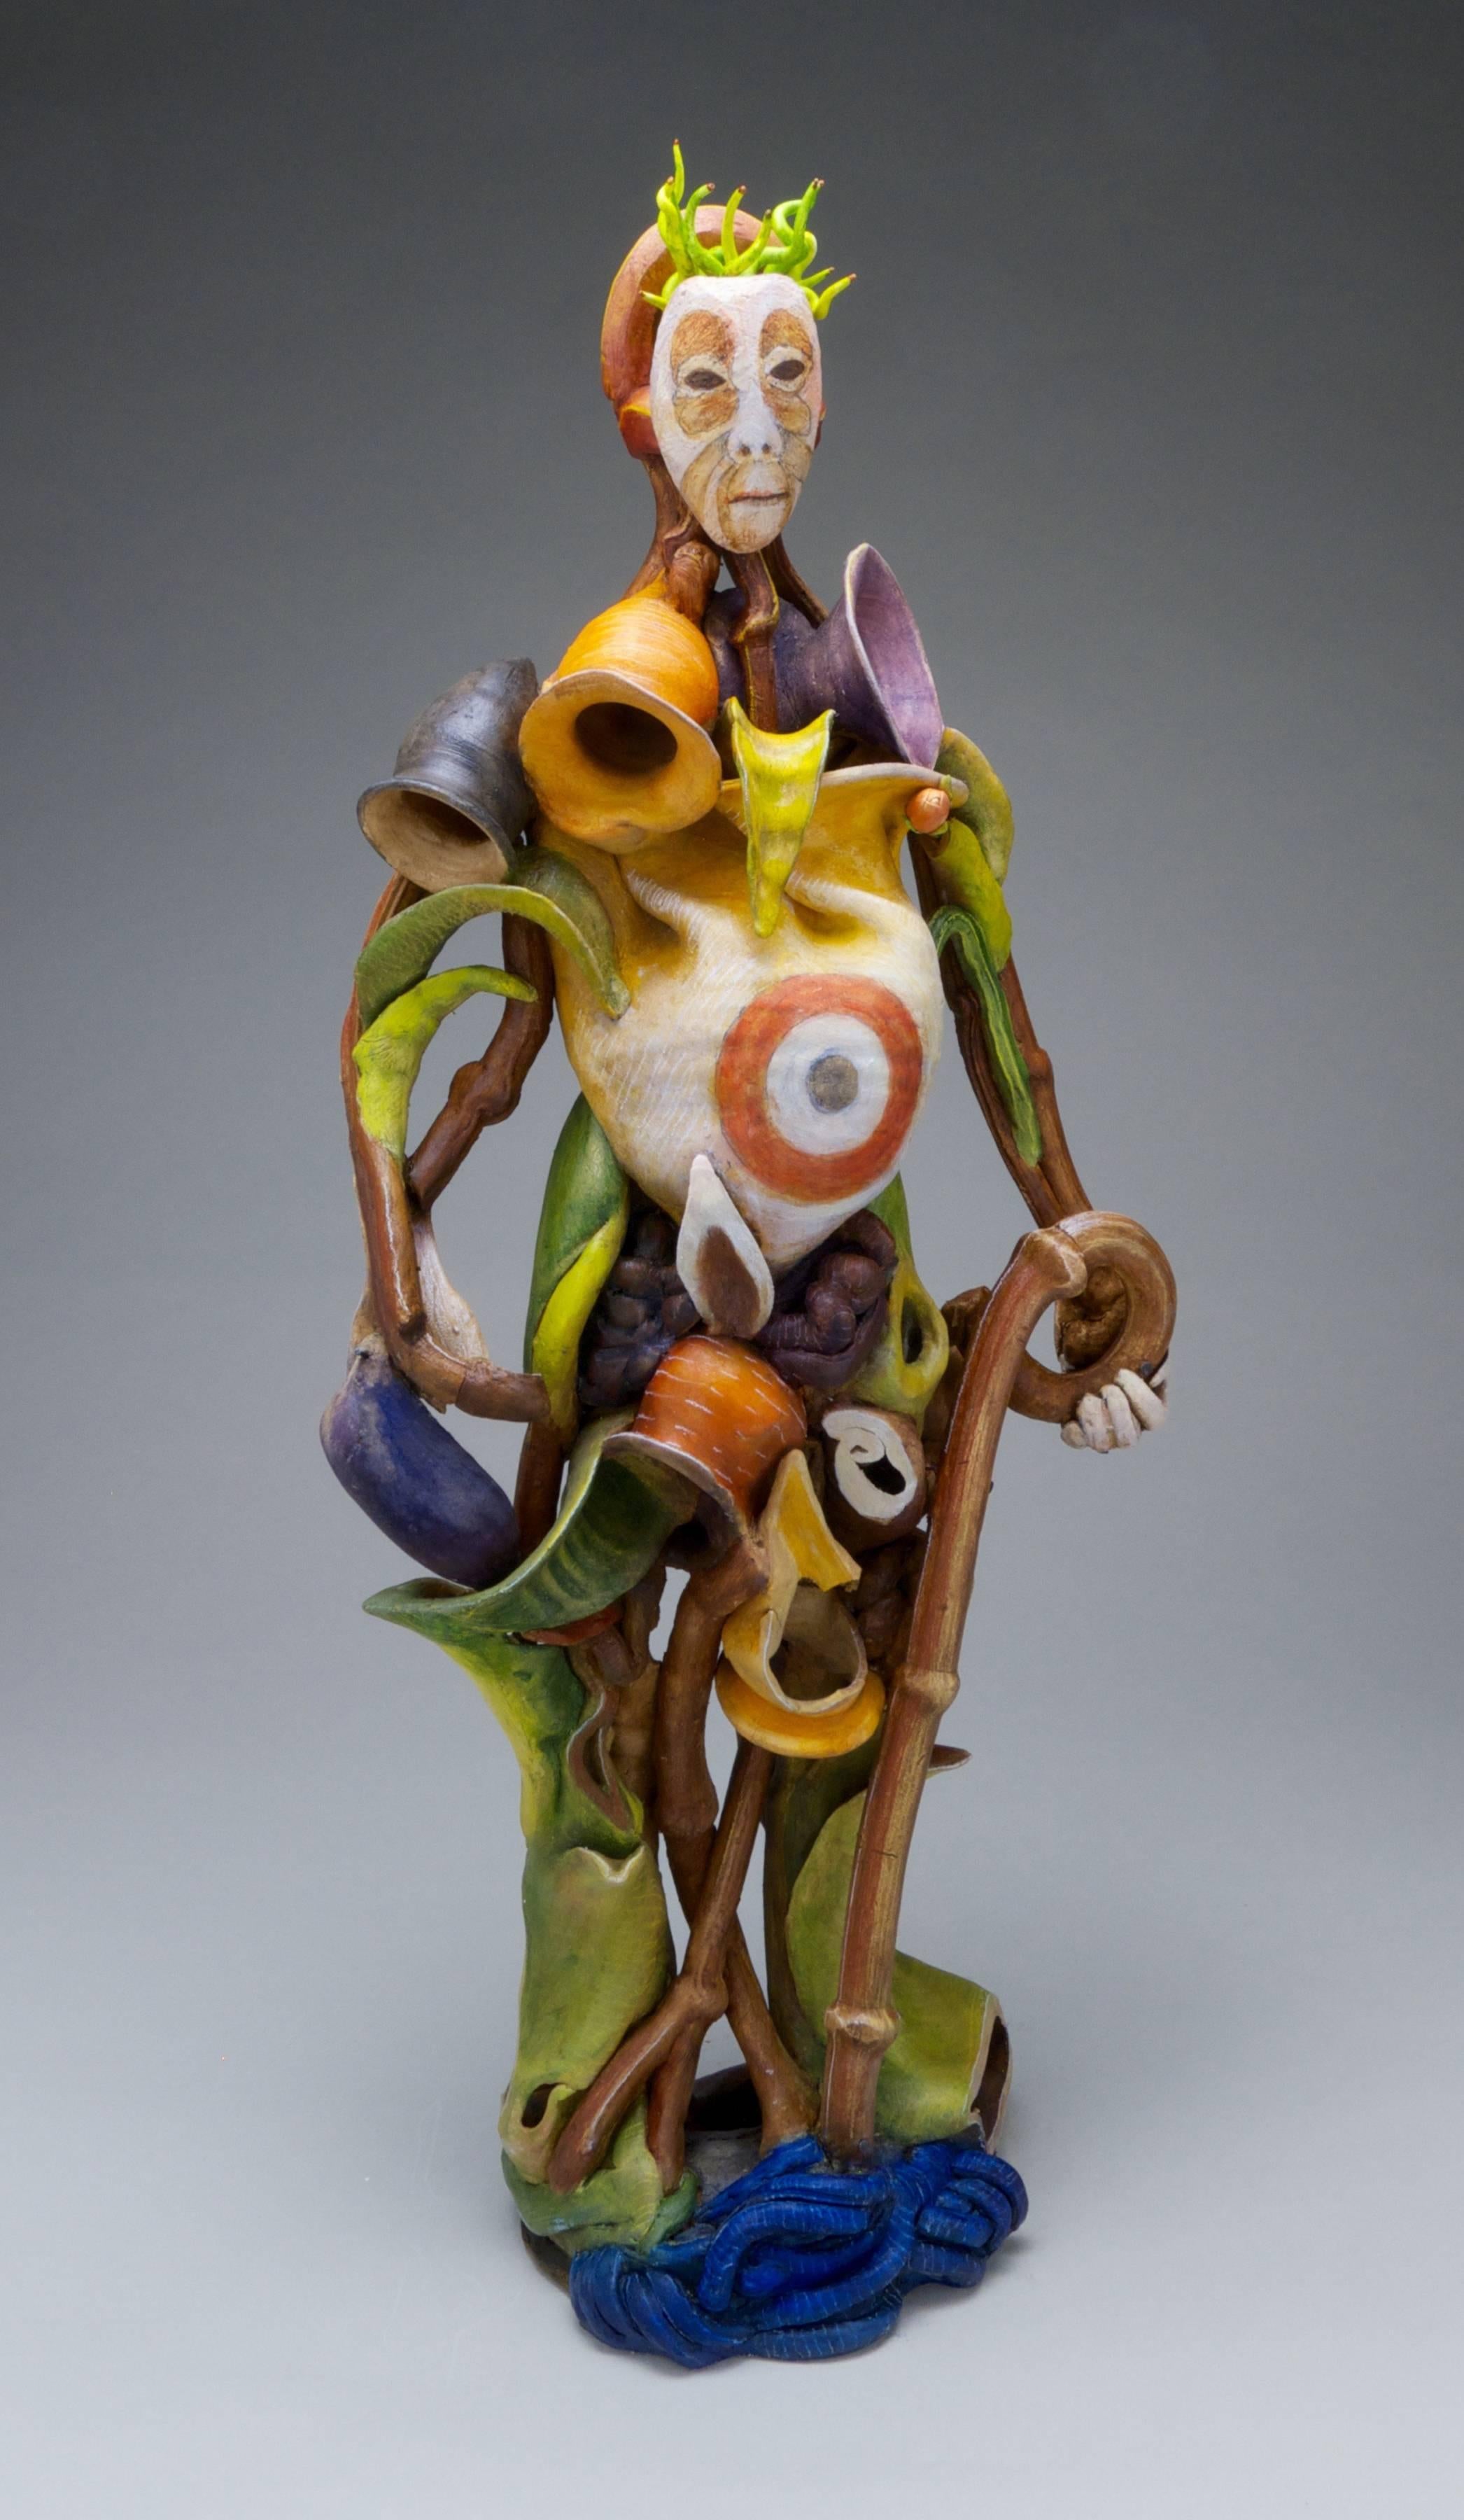 Bill Abright Figurative Sculpture - The Green Man